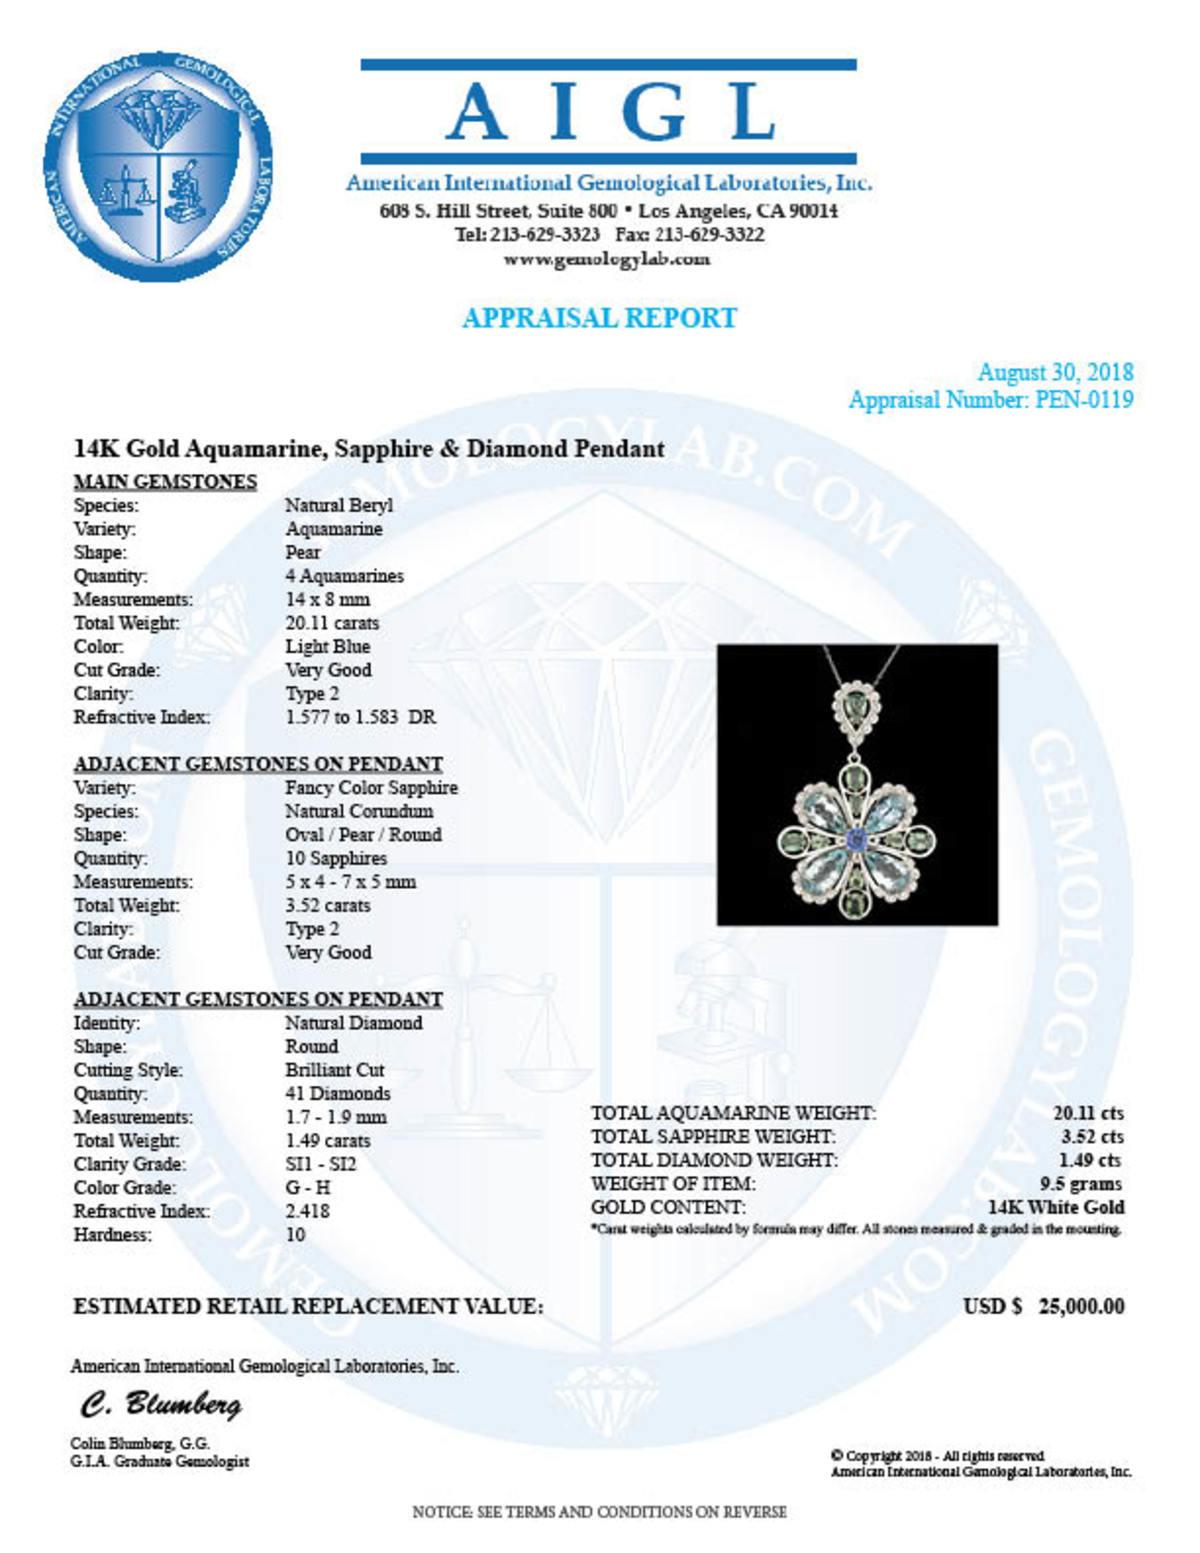 14K Gold 20.11ct Aquamarine 3.52ct Sapphire 1.49ct Diamond Pendant